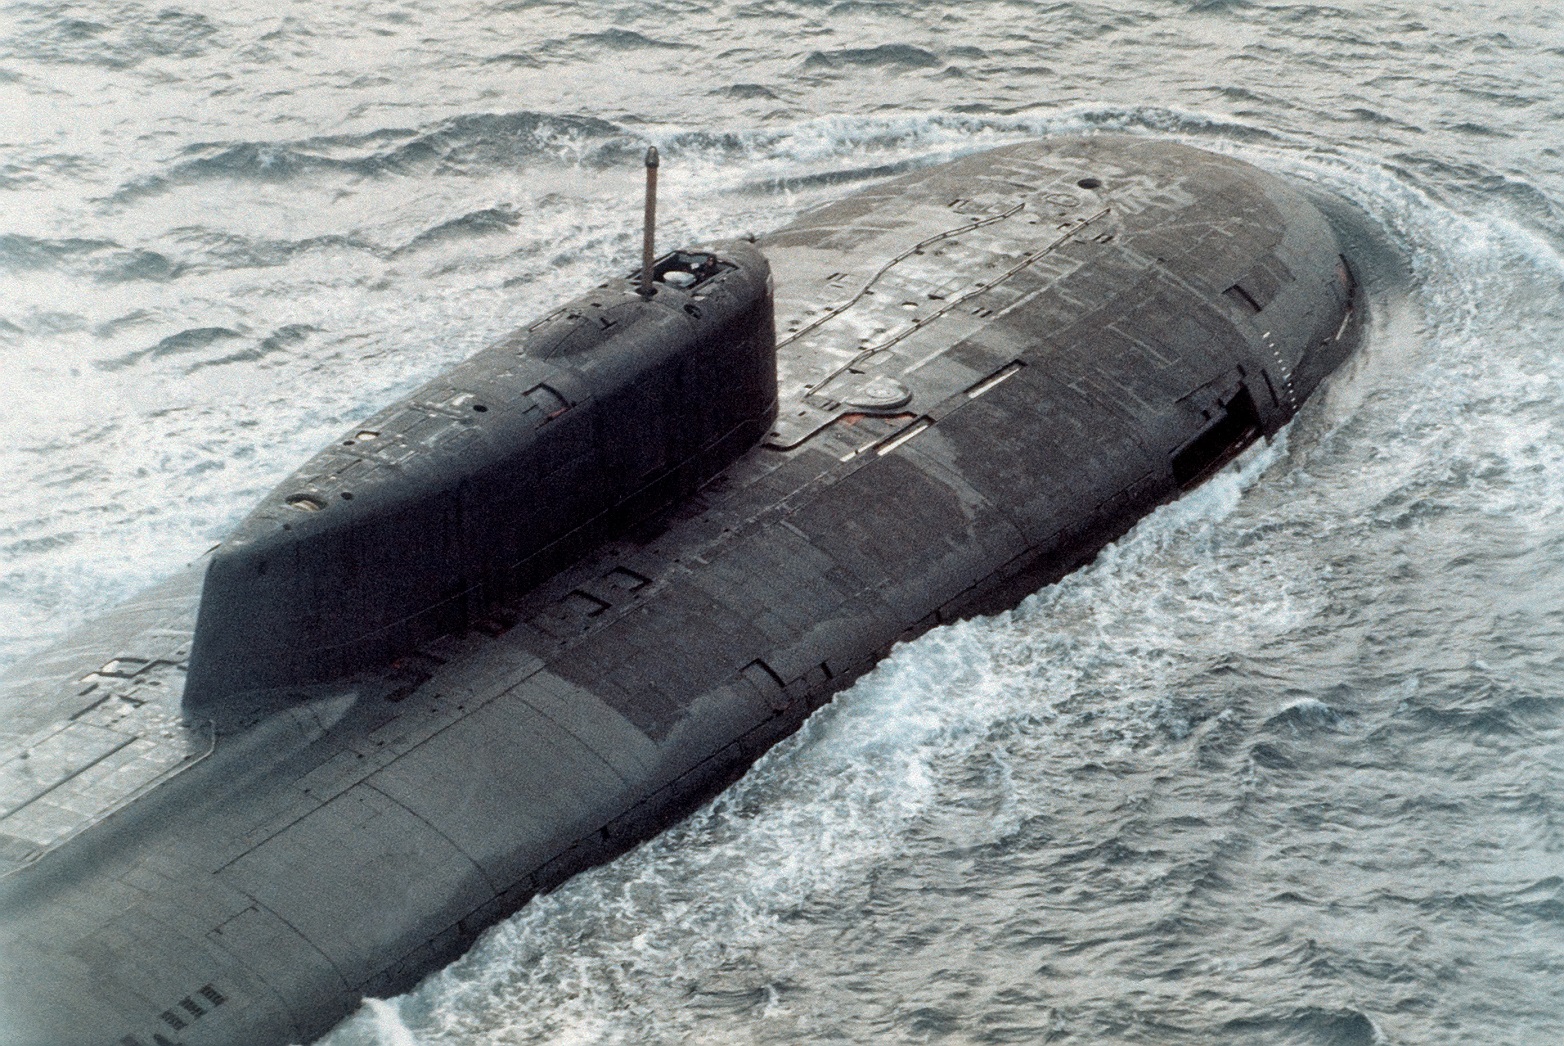 russian submarine bases